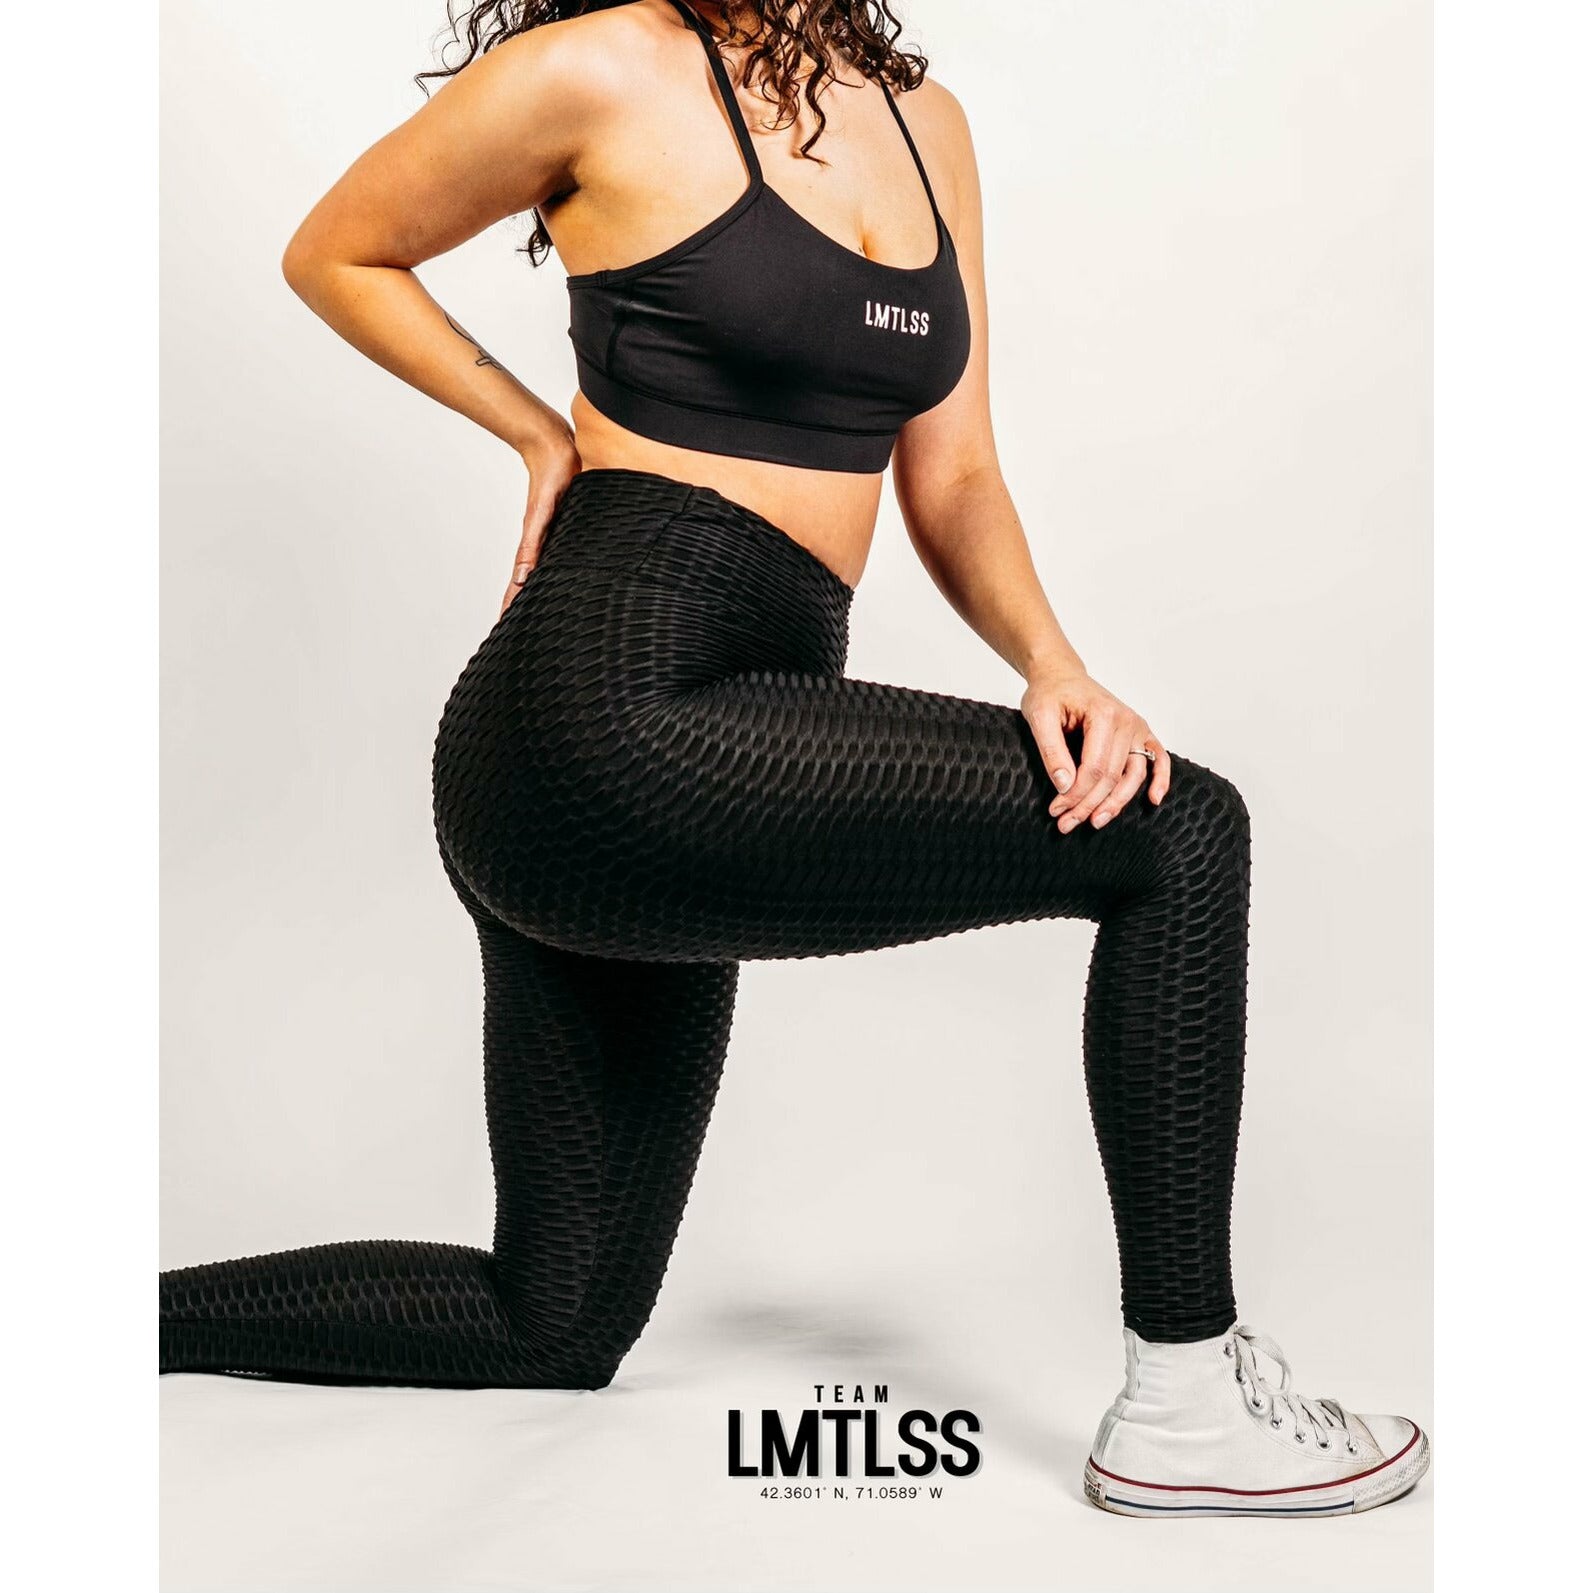 Women Compression Leggings Black High Waist Anti-Cellulite Yoga Pants  Slimming | eBay